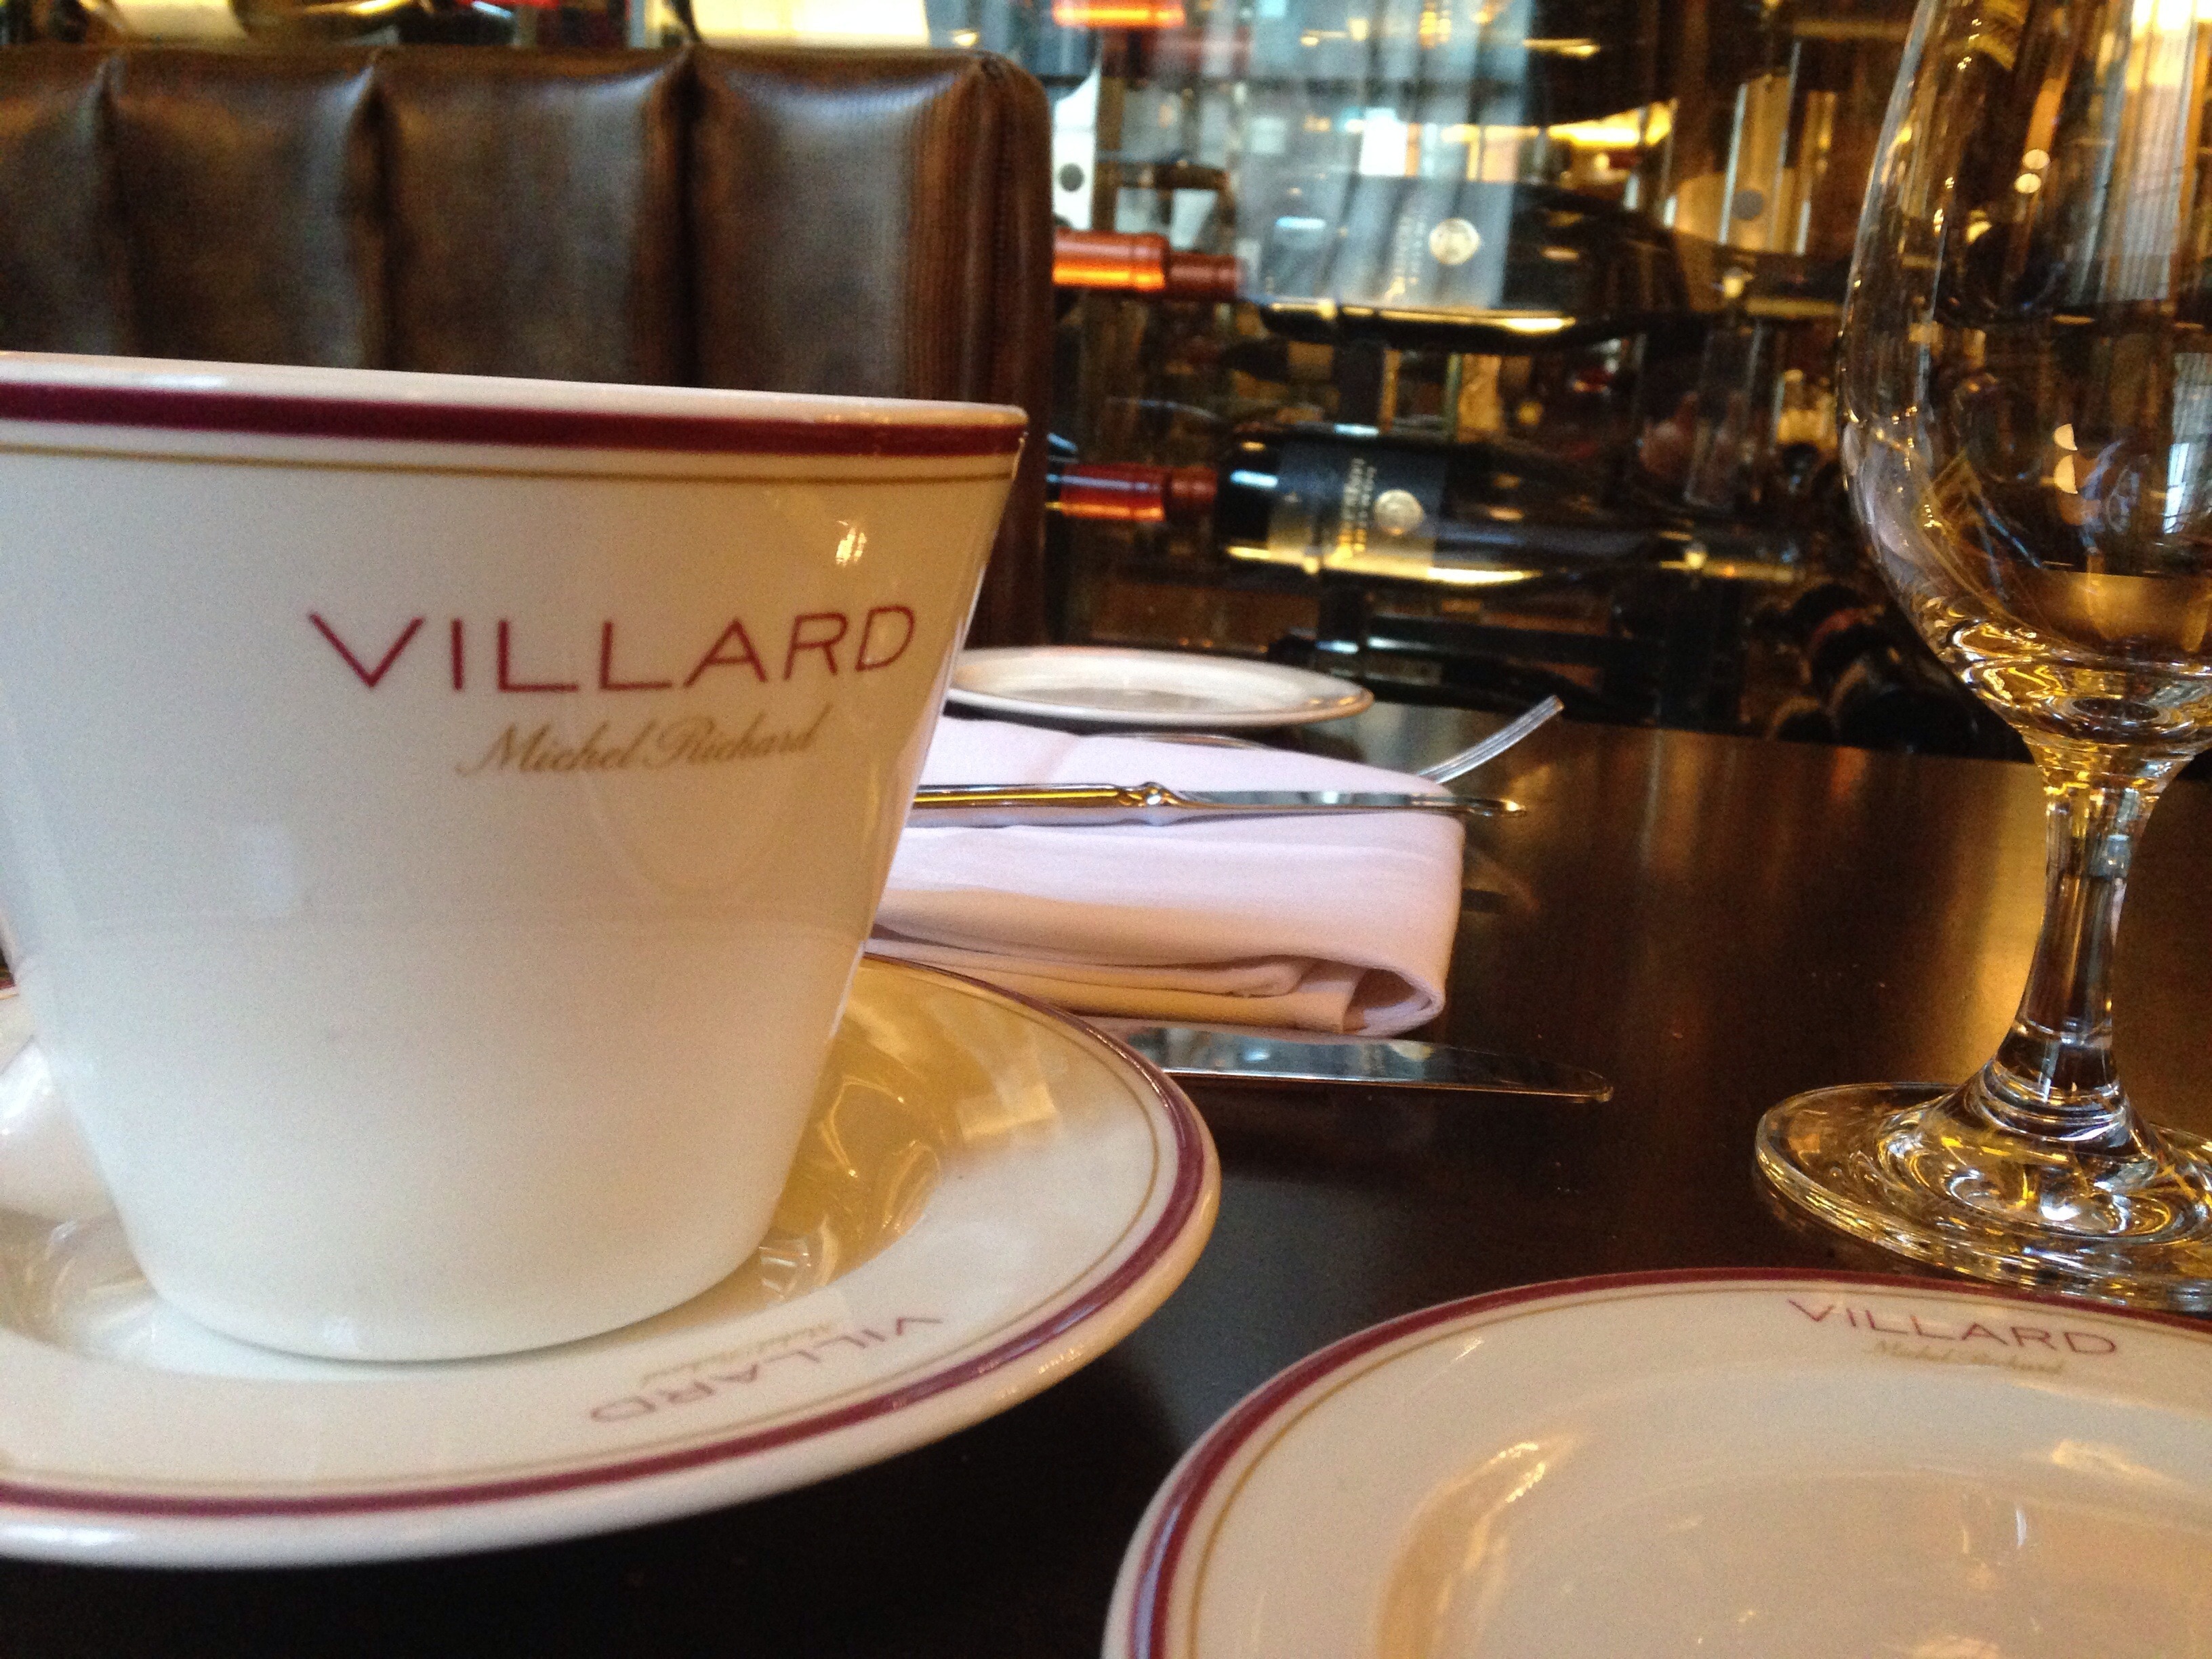 villard ceramic white teacup